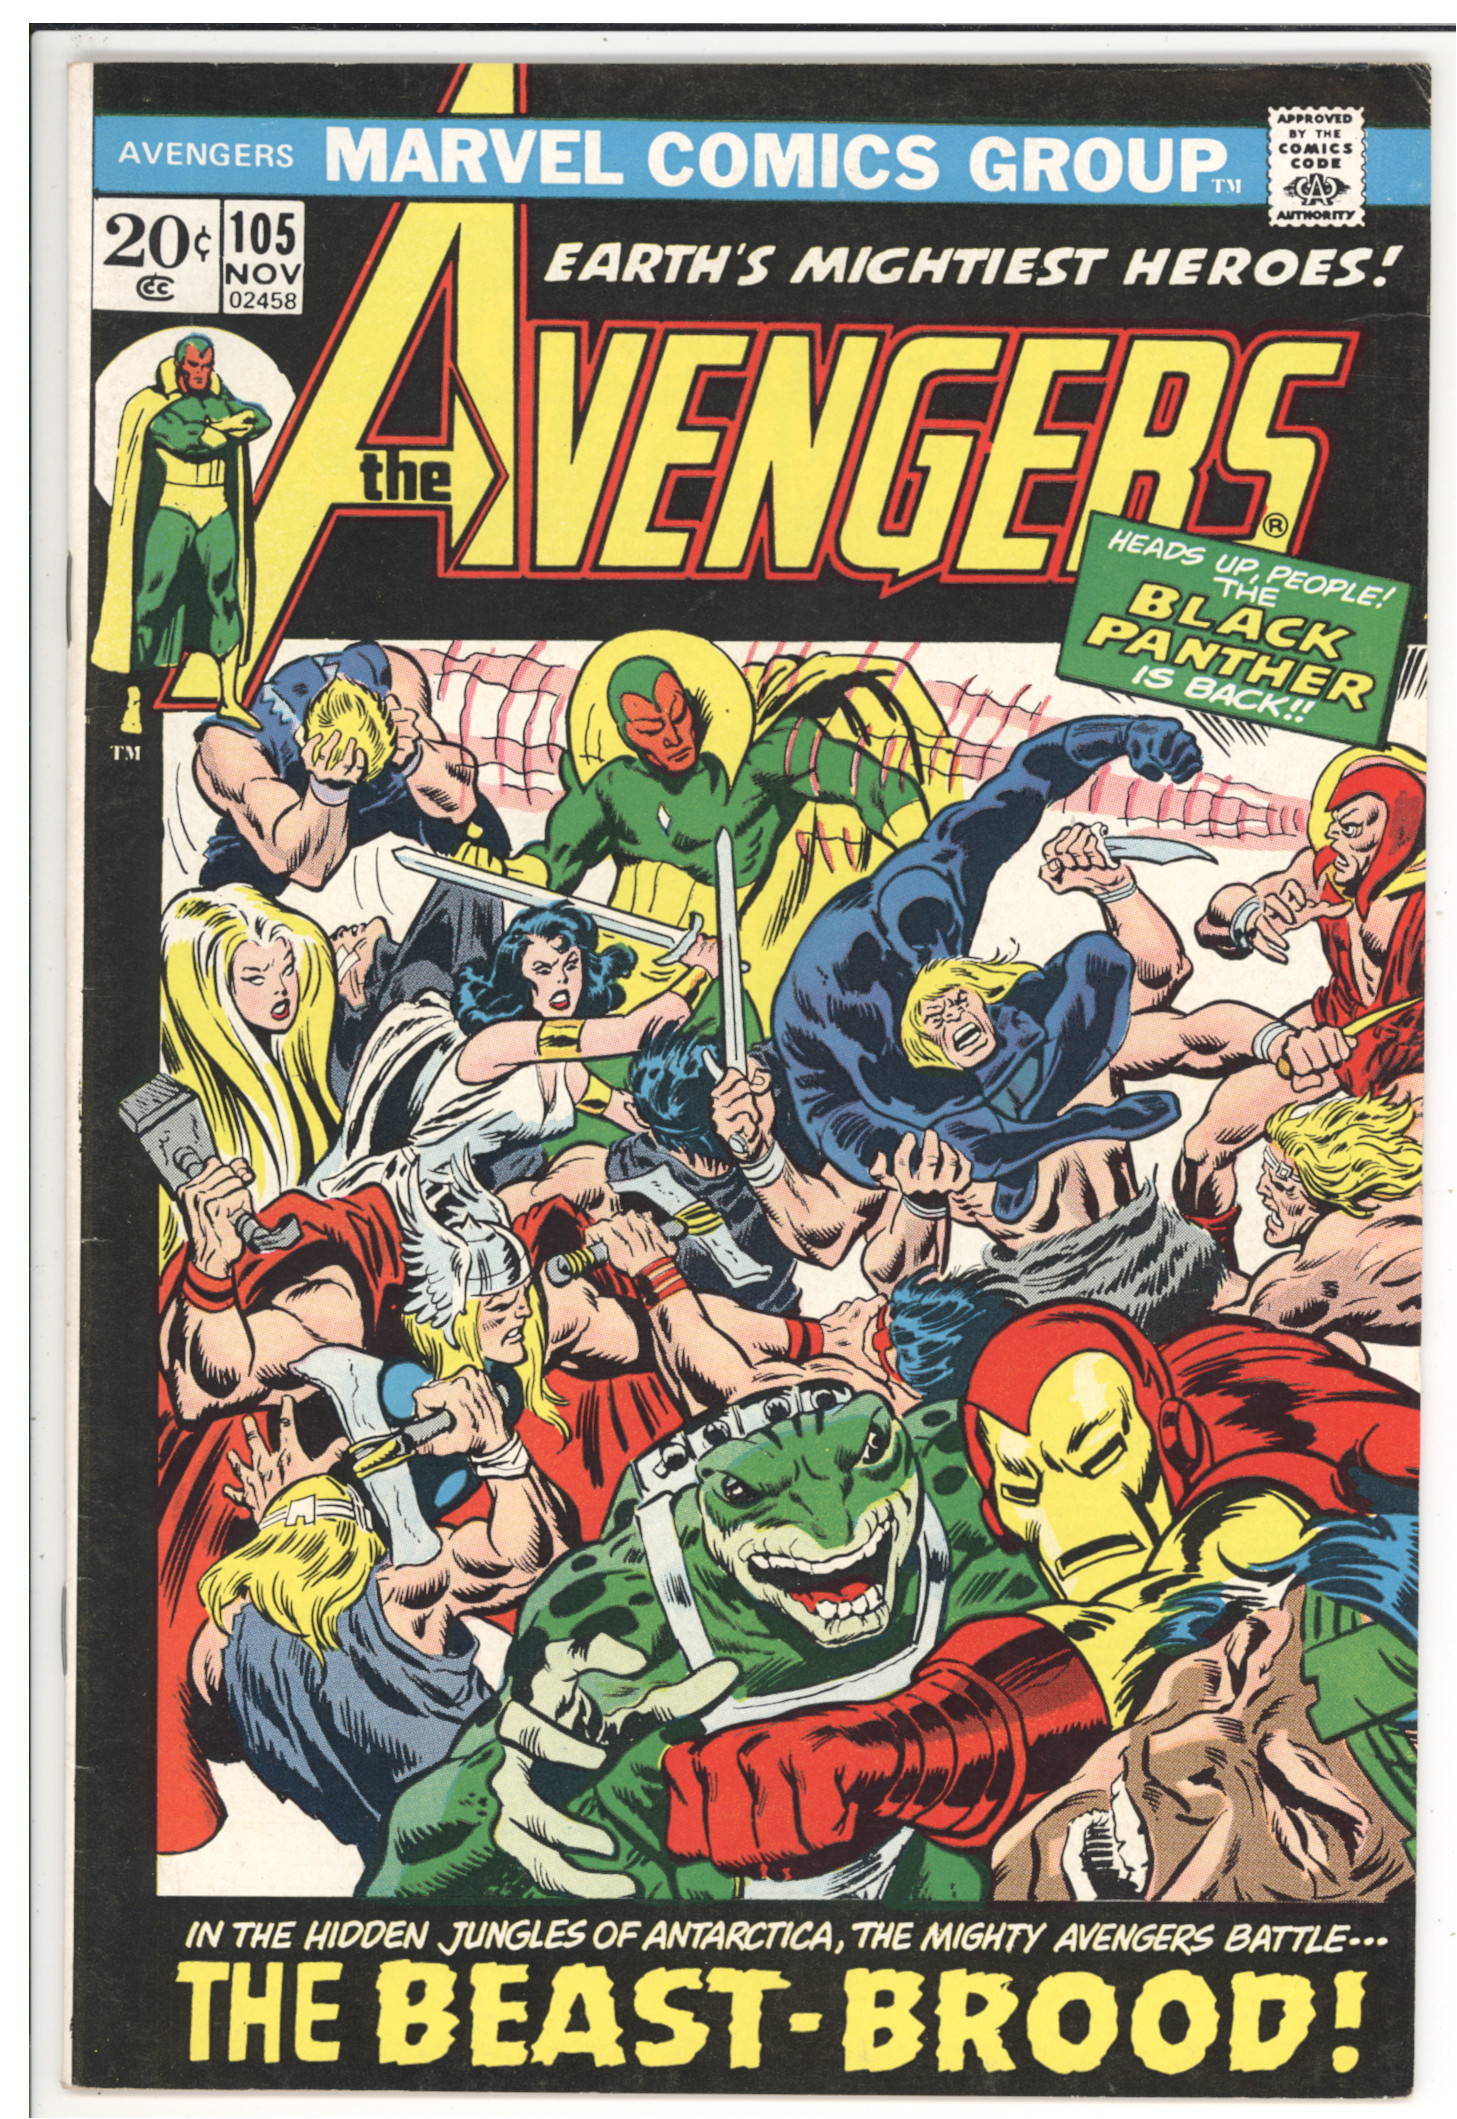 Avengers #105 front